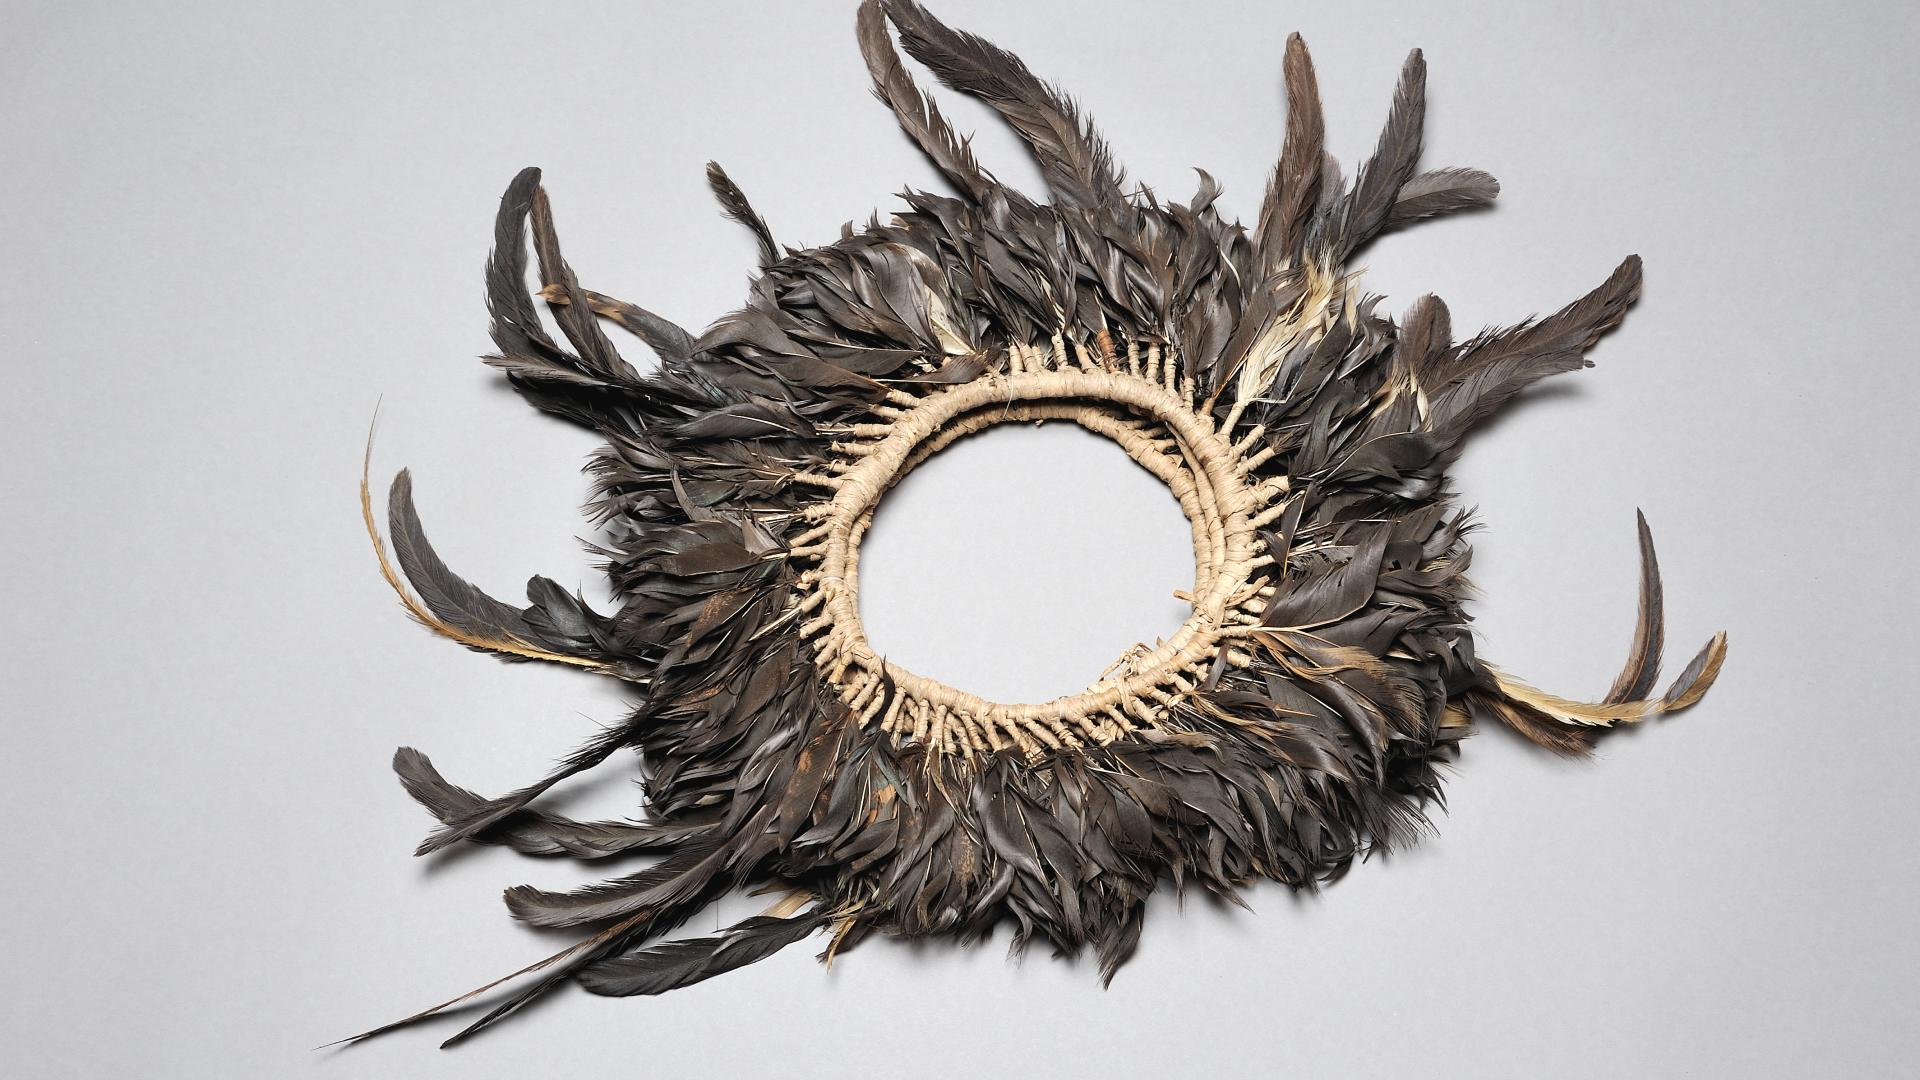 Diadema de plumas elaborado en fibra vegetal (mahute) y plumas negras de gallo.